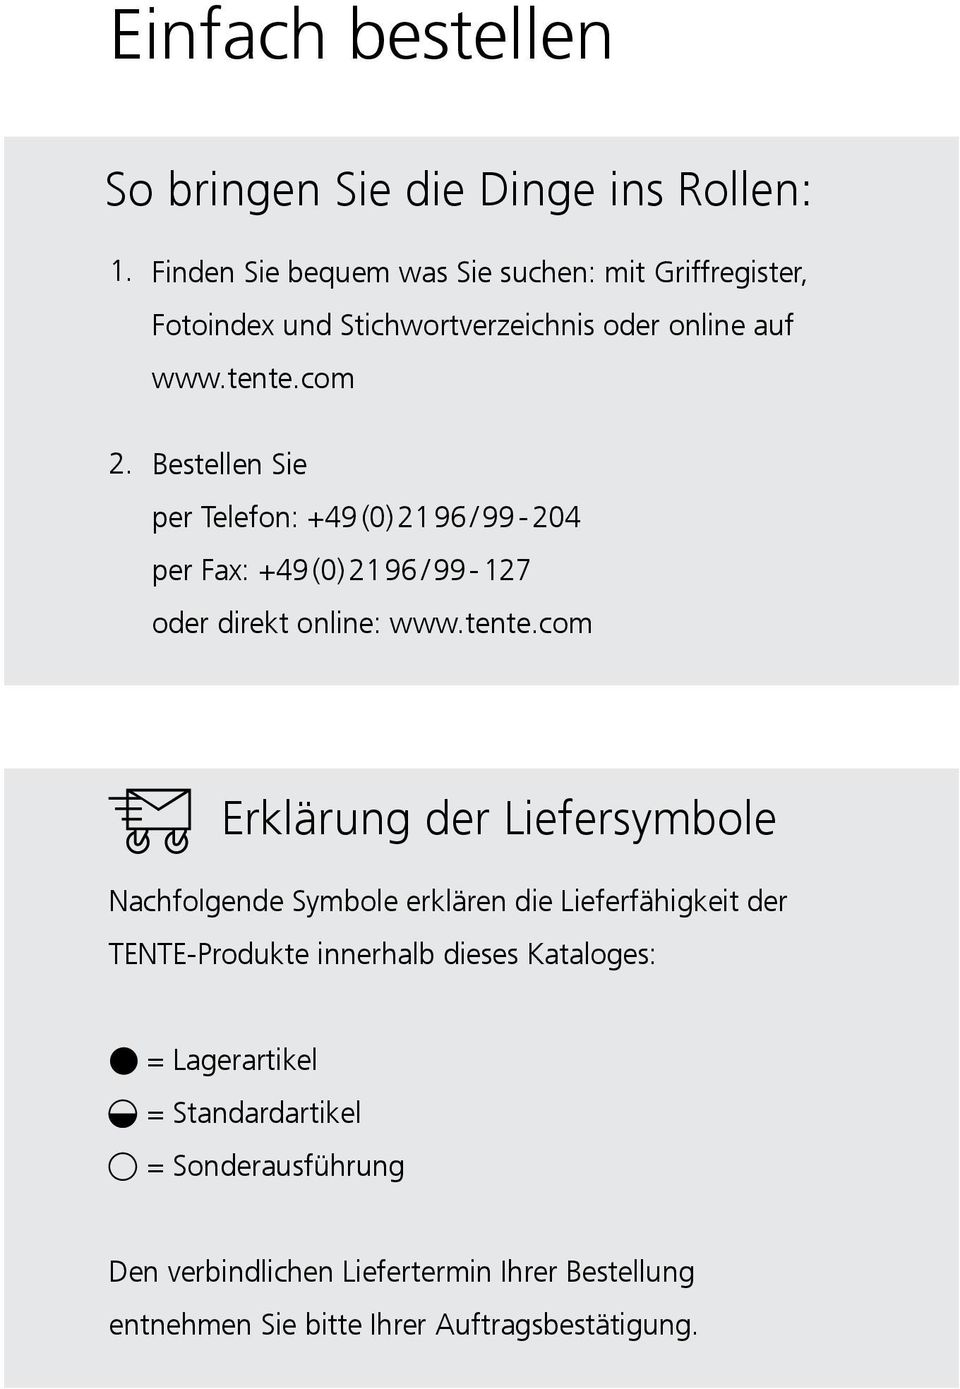 Bestellen Sie per Telefon: +49 (0) 2196 / 99-204 per Fax: +49 (0) 2196 / 99-127 oder direkt online: www.tente.